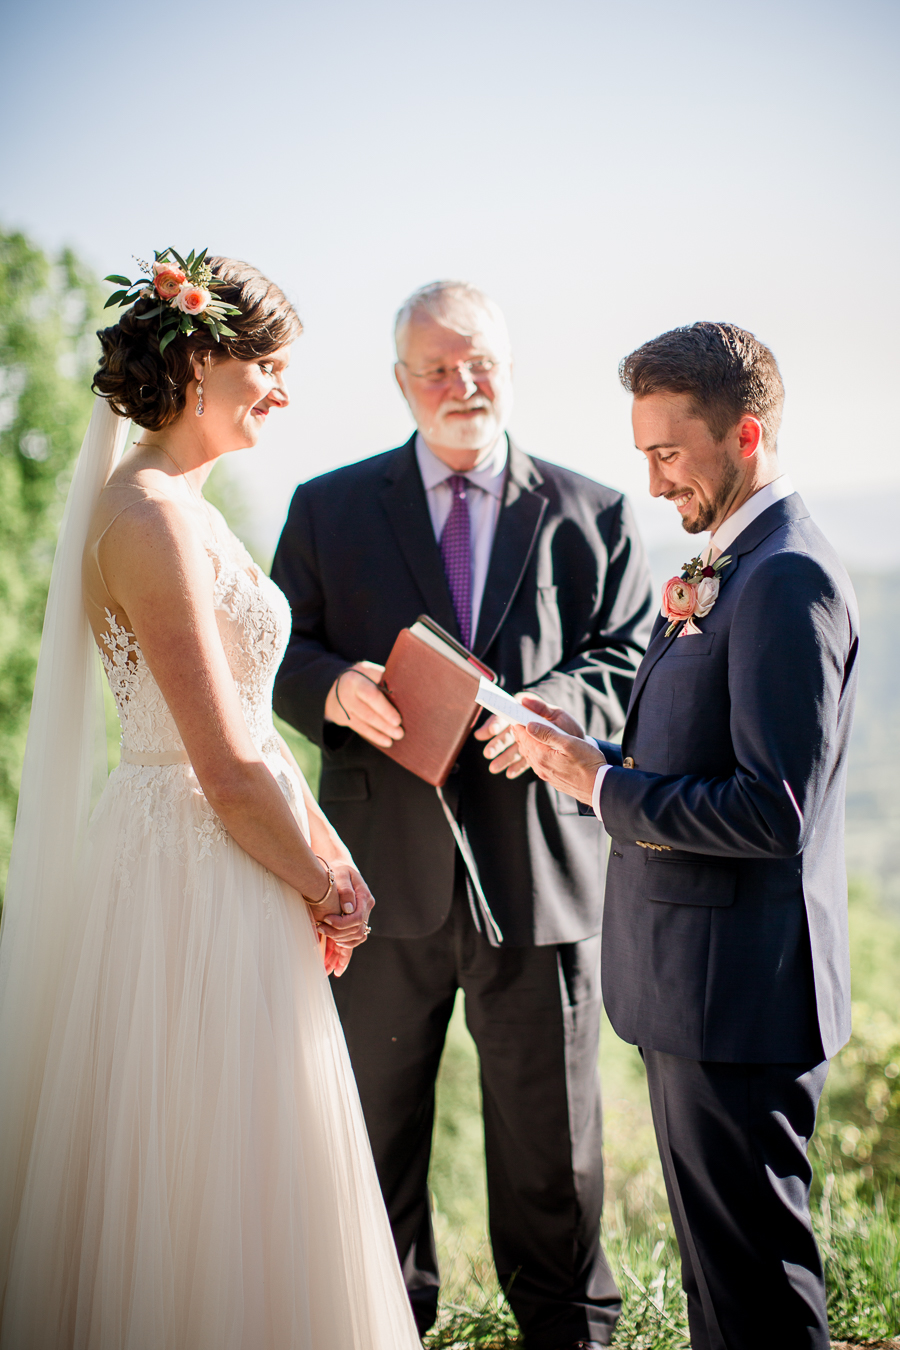 Groom reading vows at this North Carolina Elopement by Knoxville Wedding Photographer, Amanda May Photos.